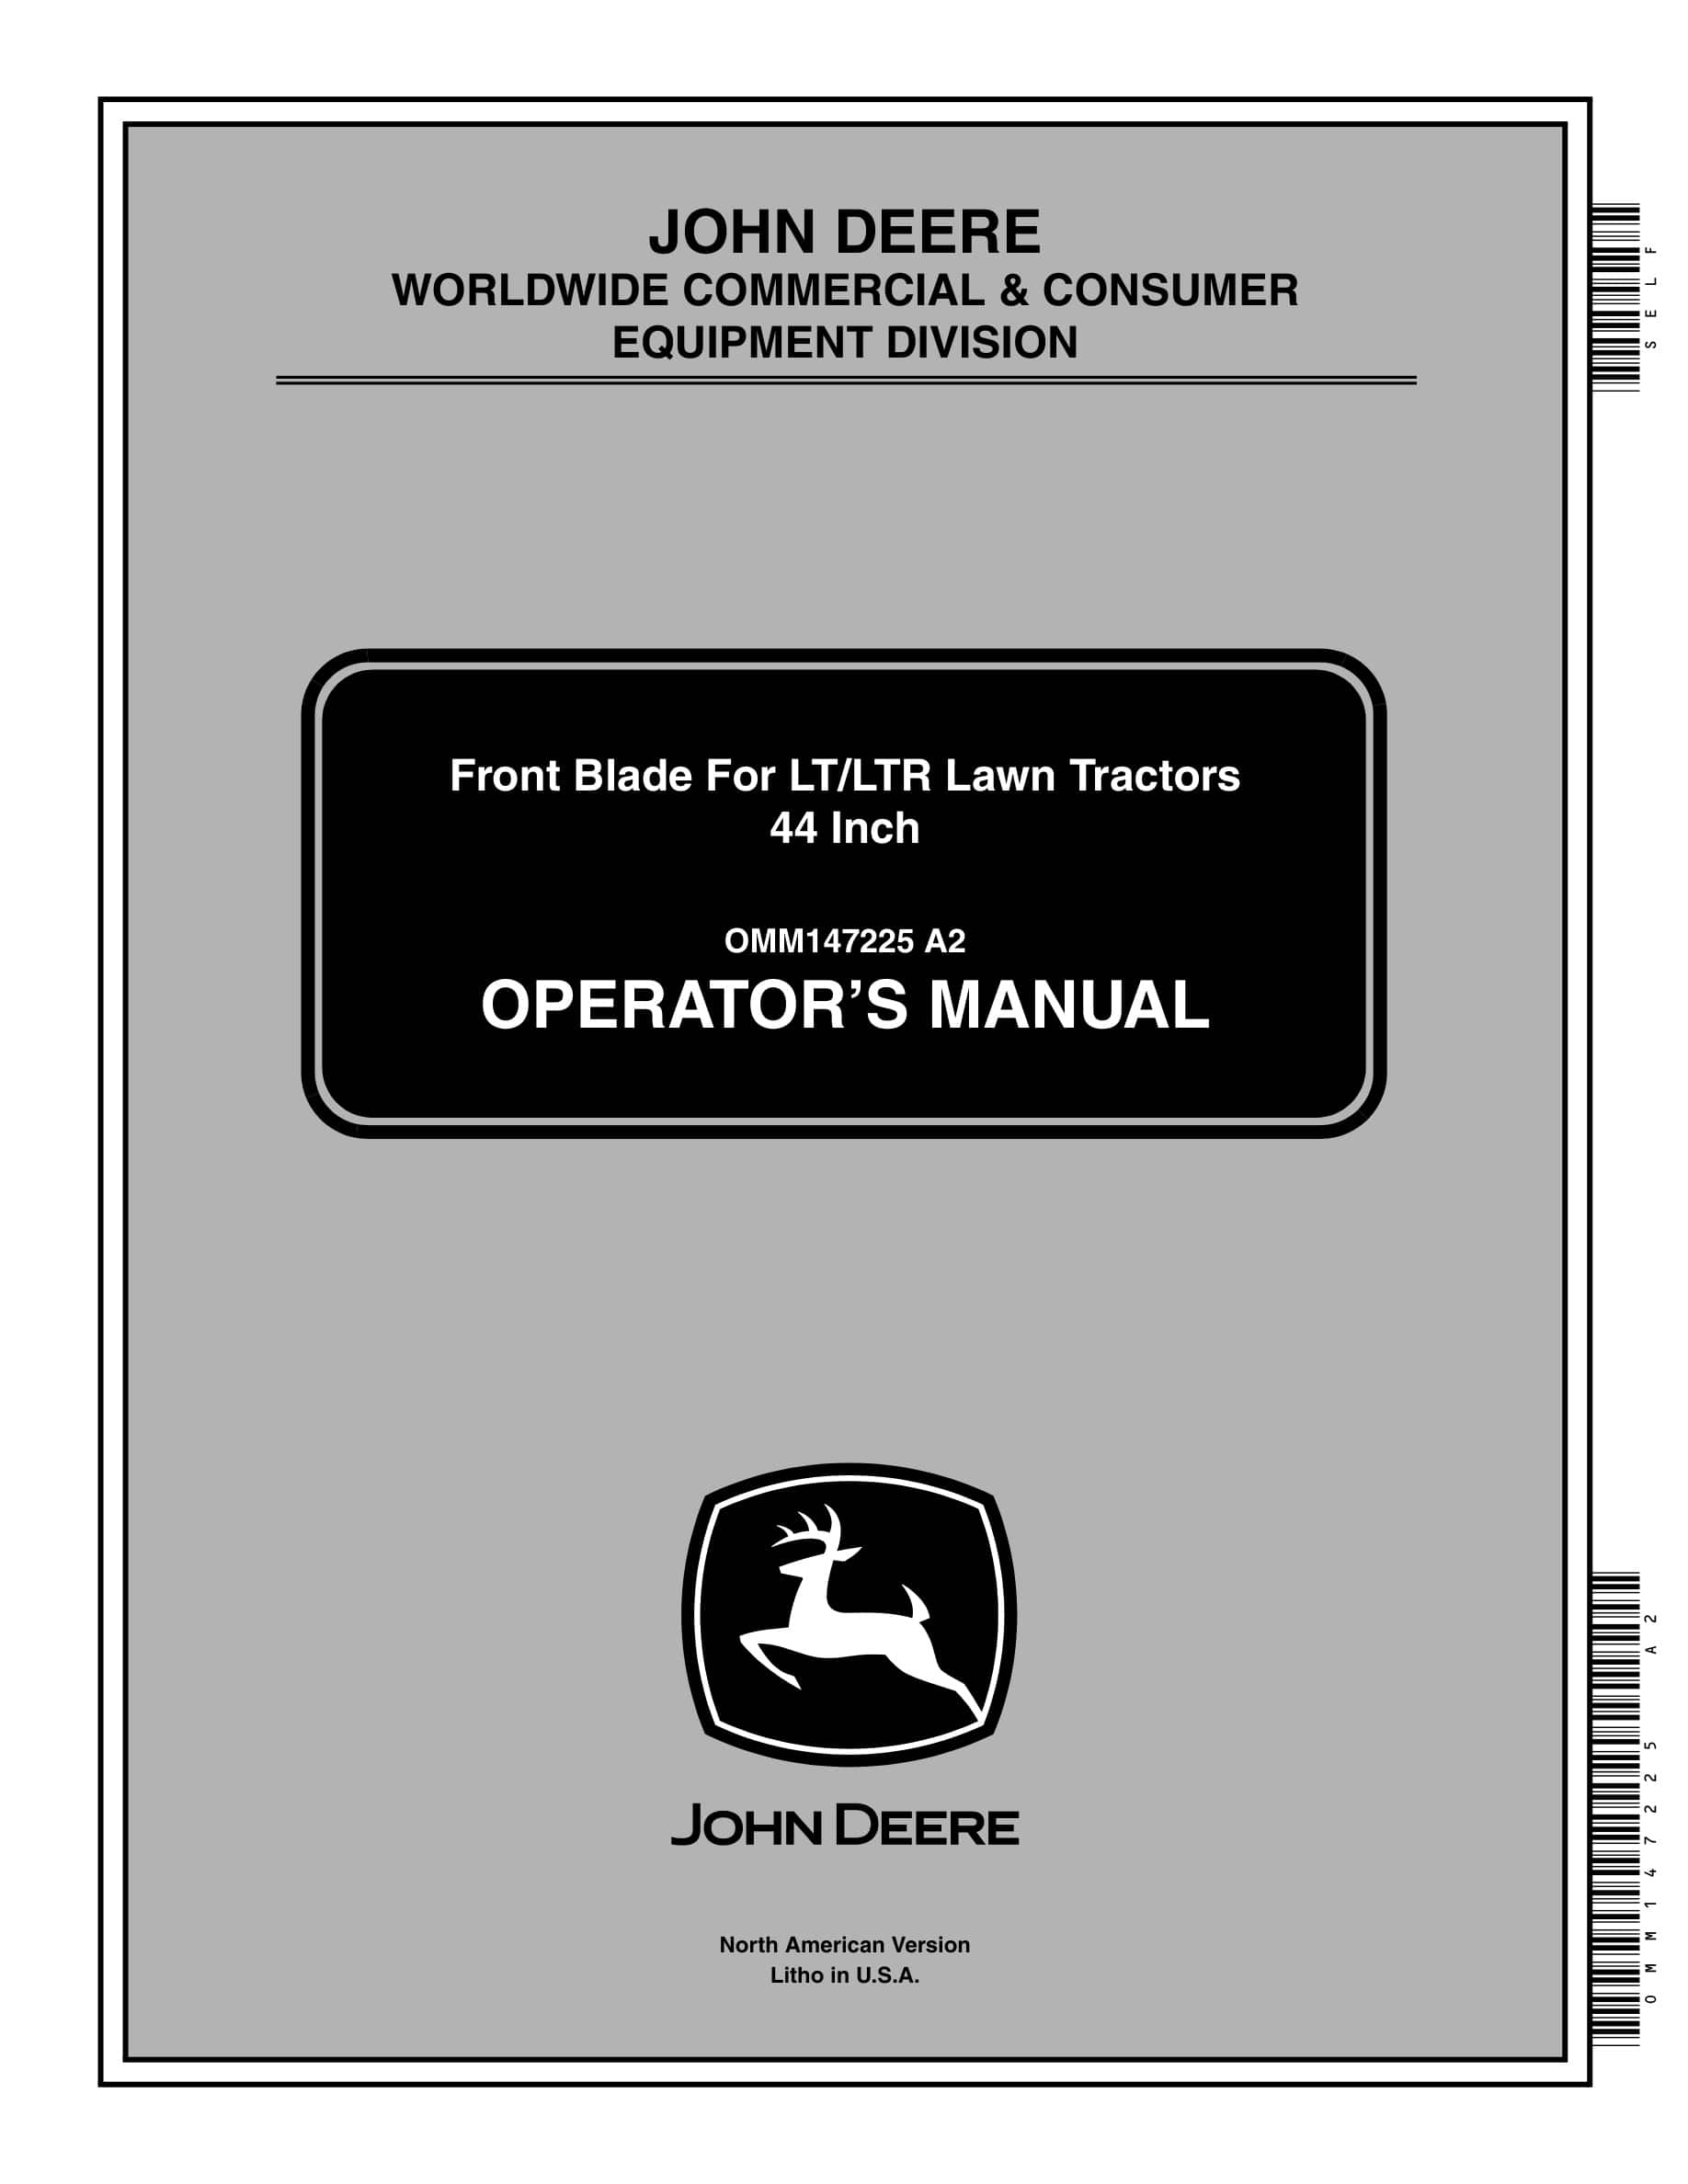 John Deere Front Blade For Lt Ltr Lawn 44 Inch Tractors Operator Manuals OMM147225-1